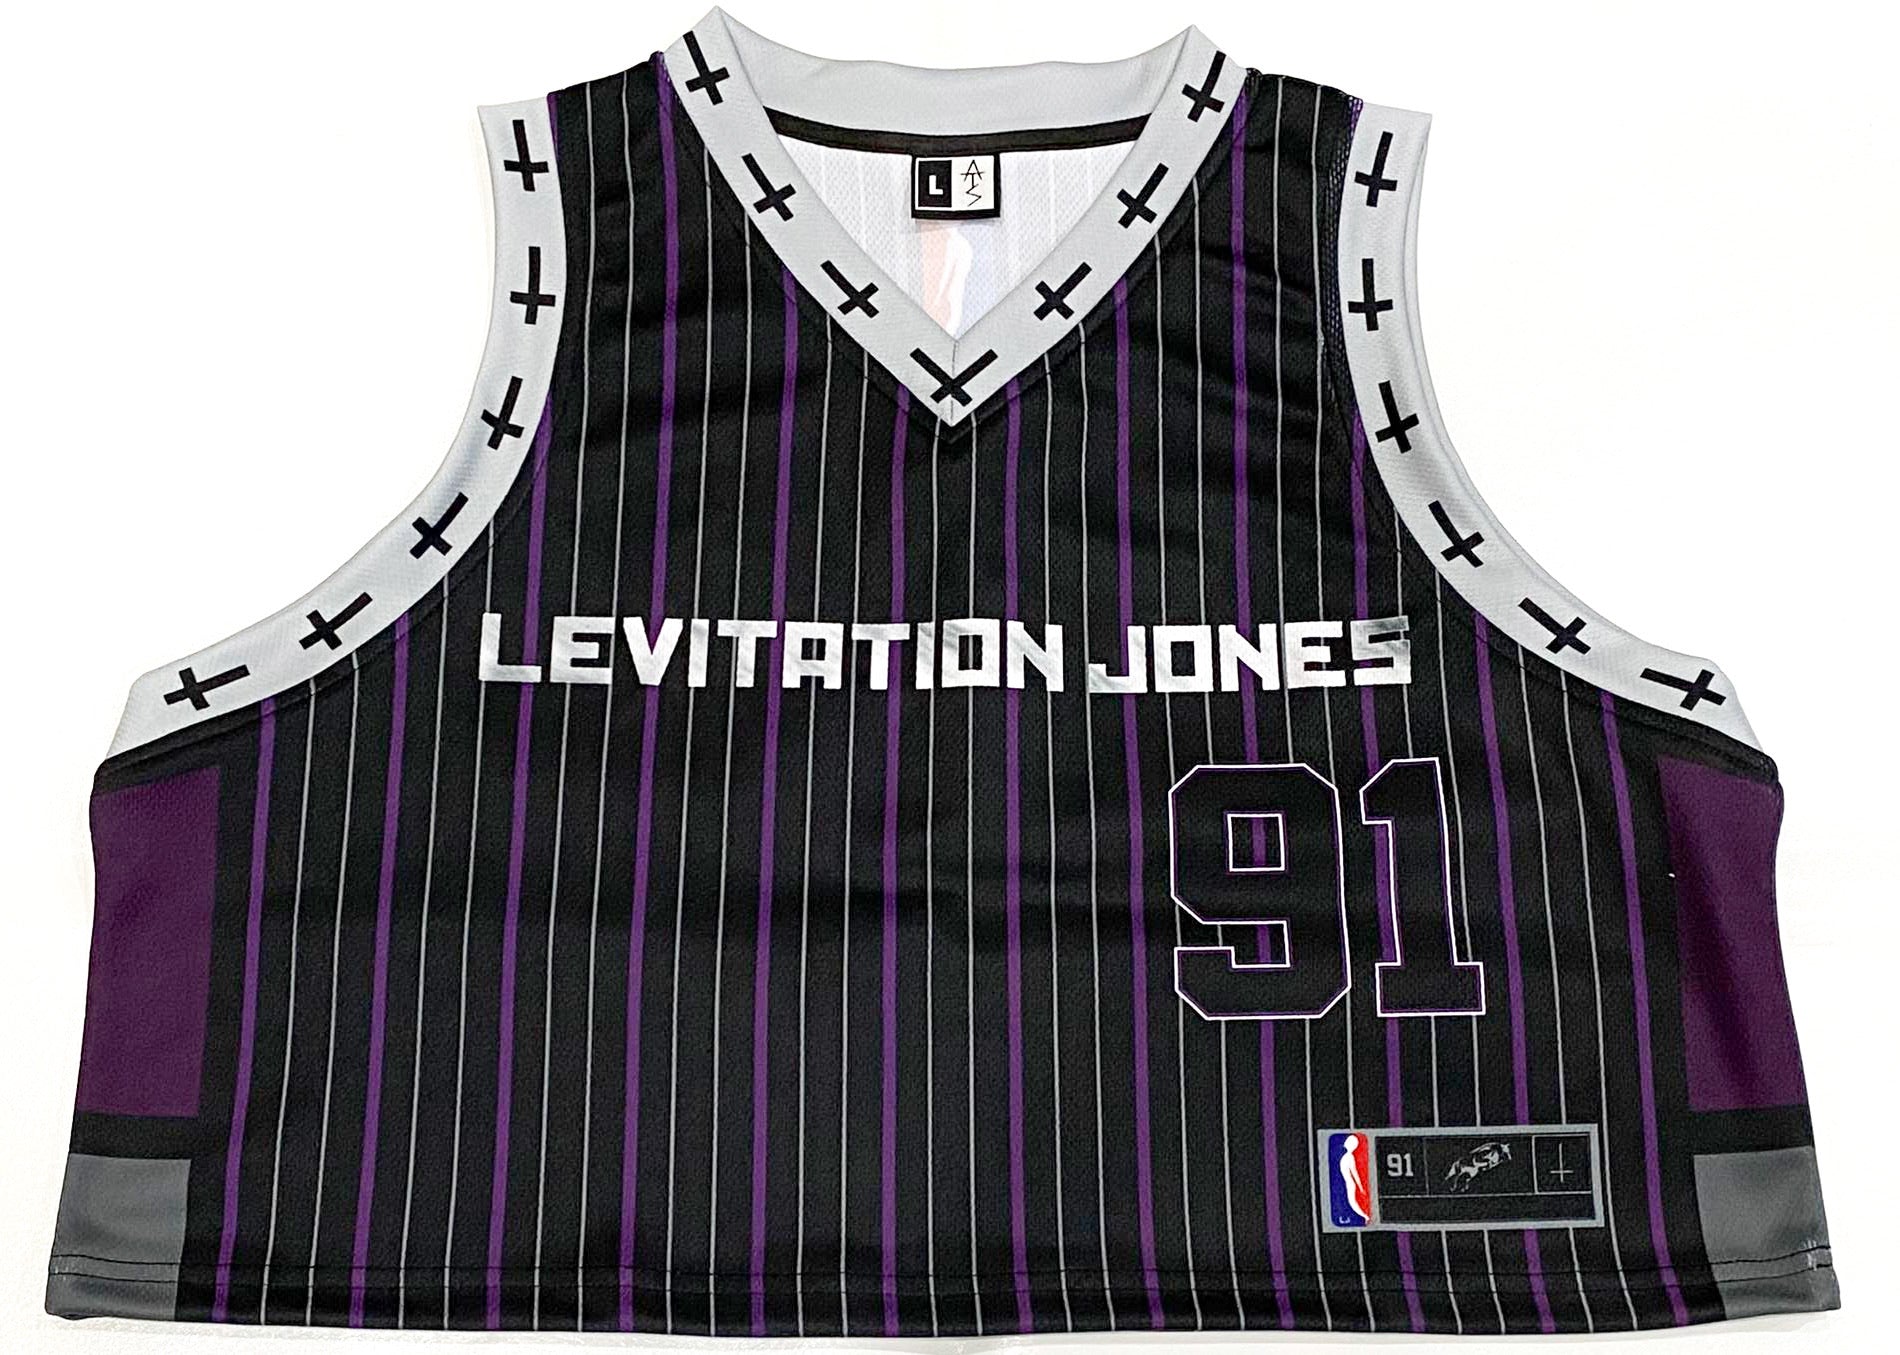 Levitation Jones Crop Top Basketball Jersey